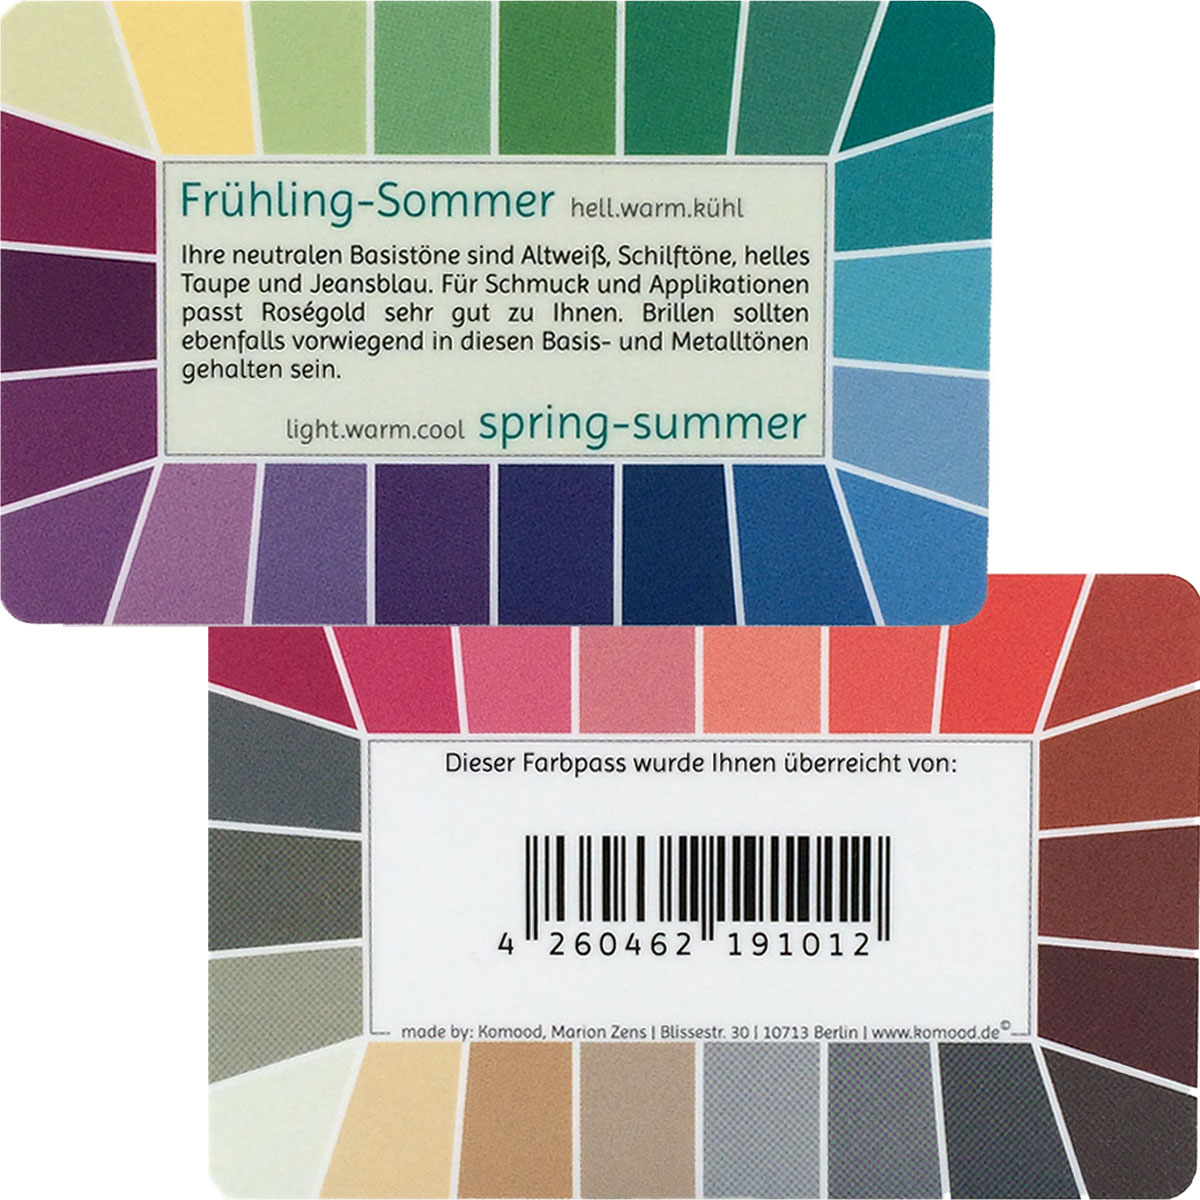 Farbpass Frühling-Sommer - Loop, 44 Farben